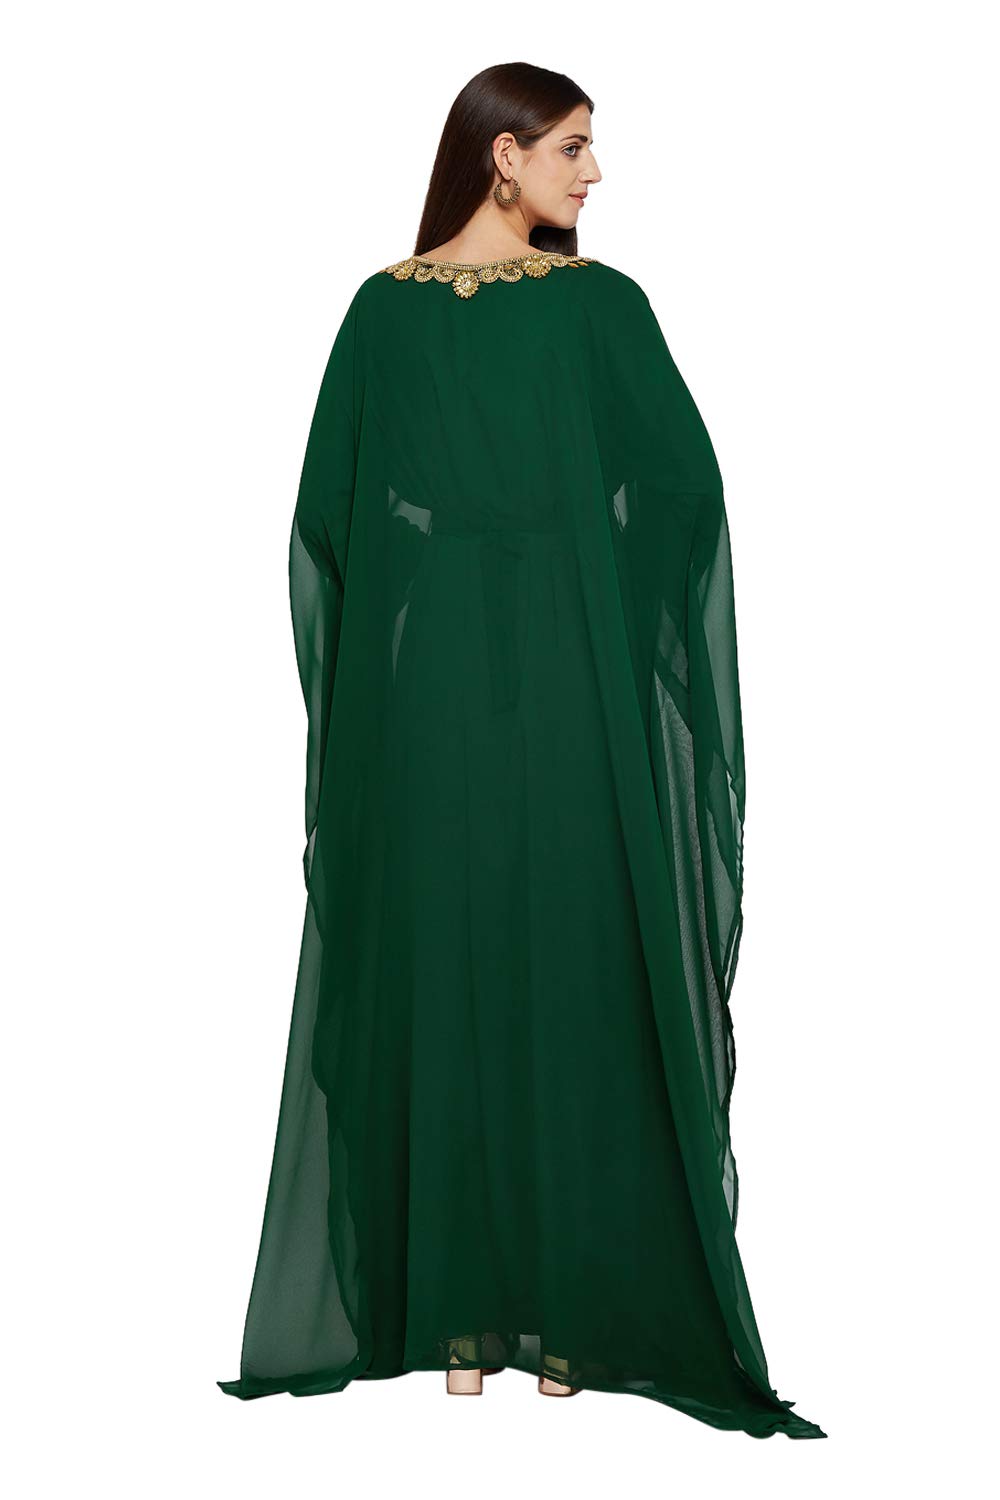 ANIIQ Women Dubai Farasha Kaftan Long Sleeves Evening, Party, Wedding Dress with Free Scarf